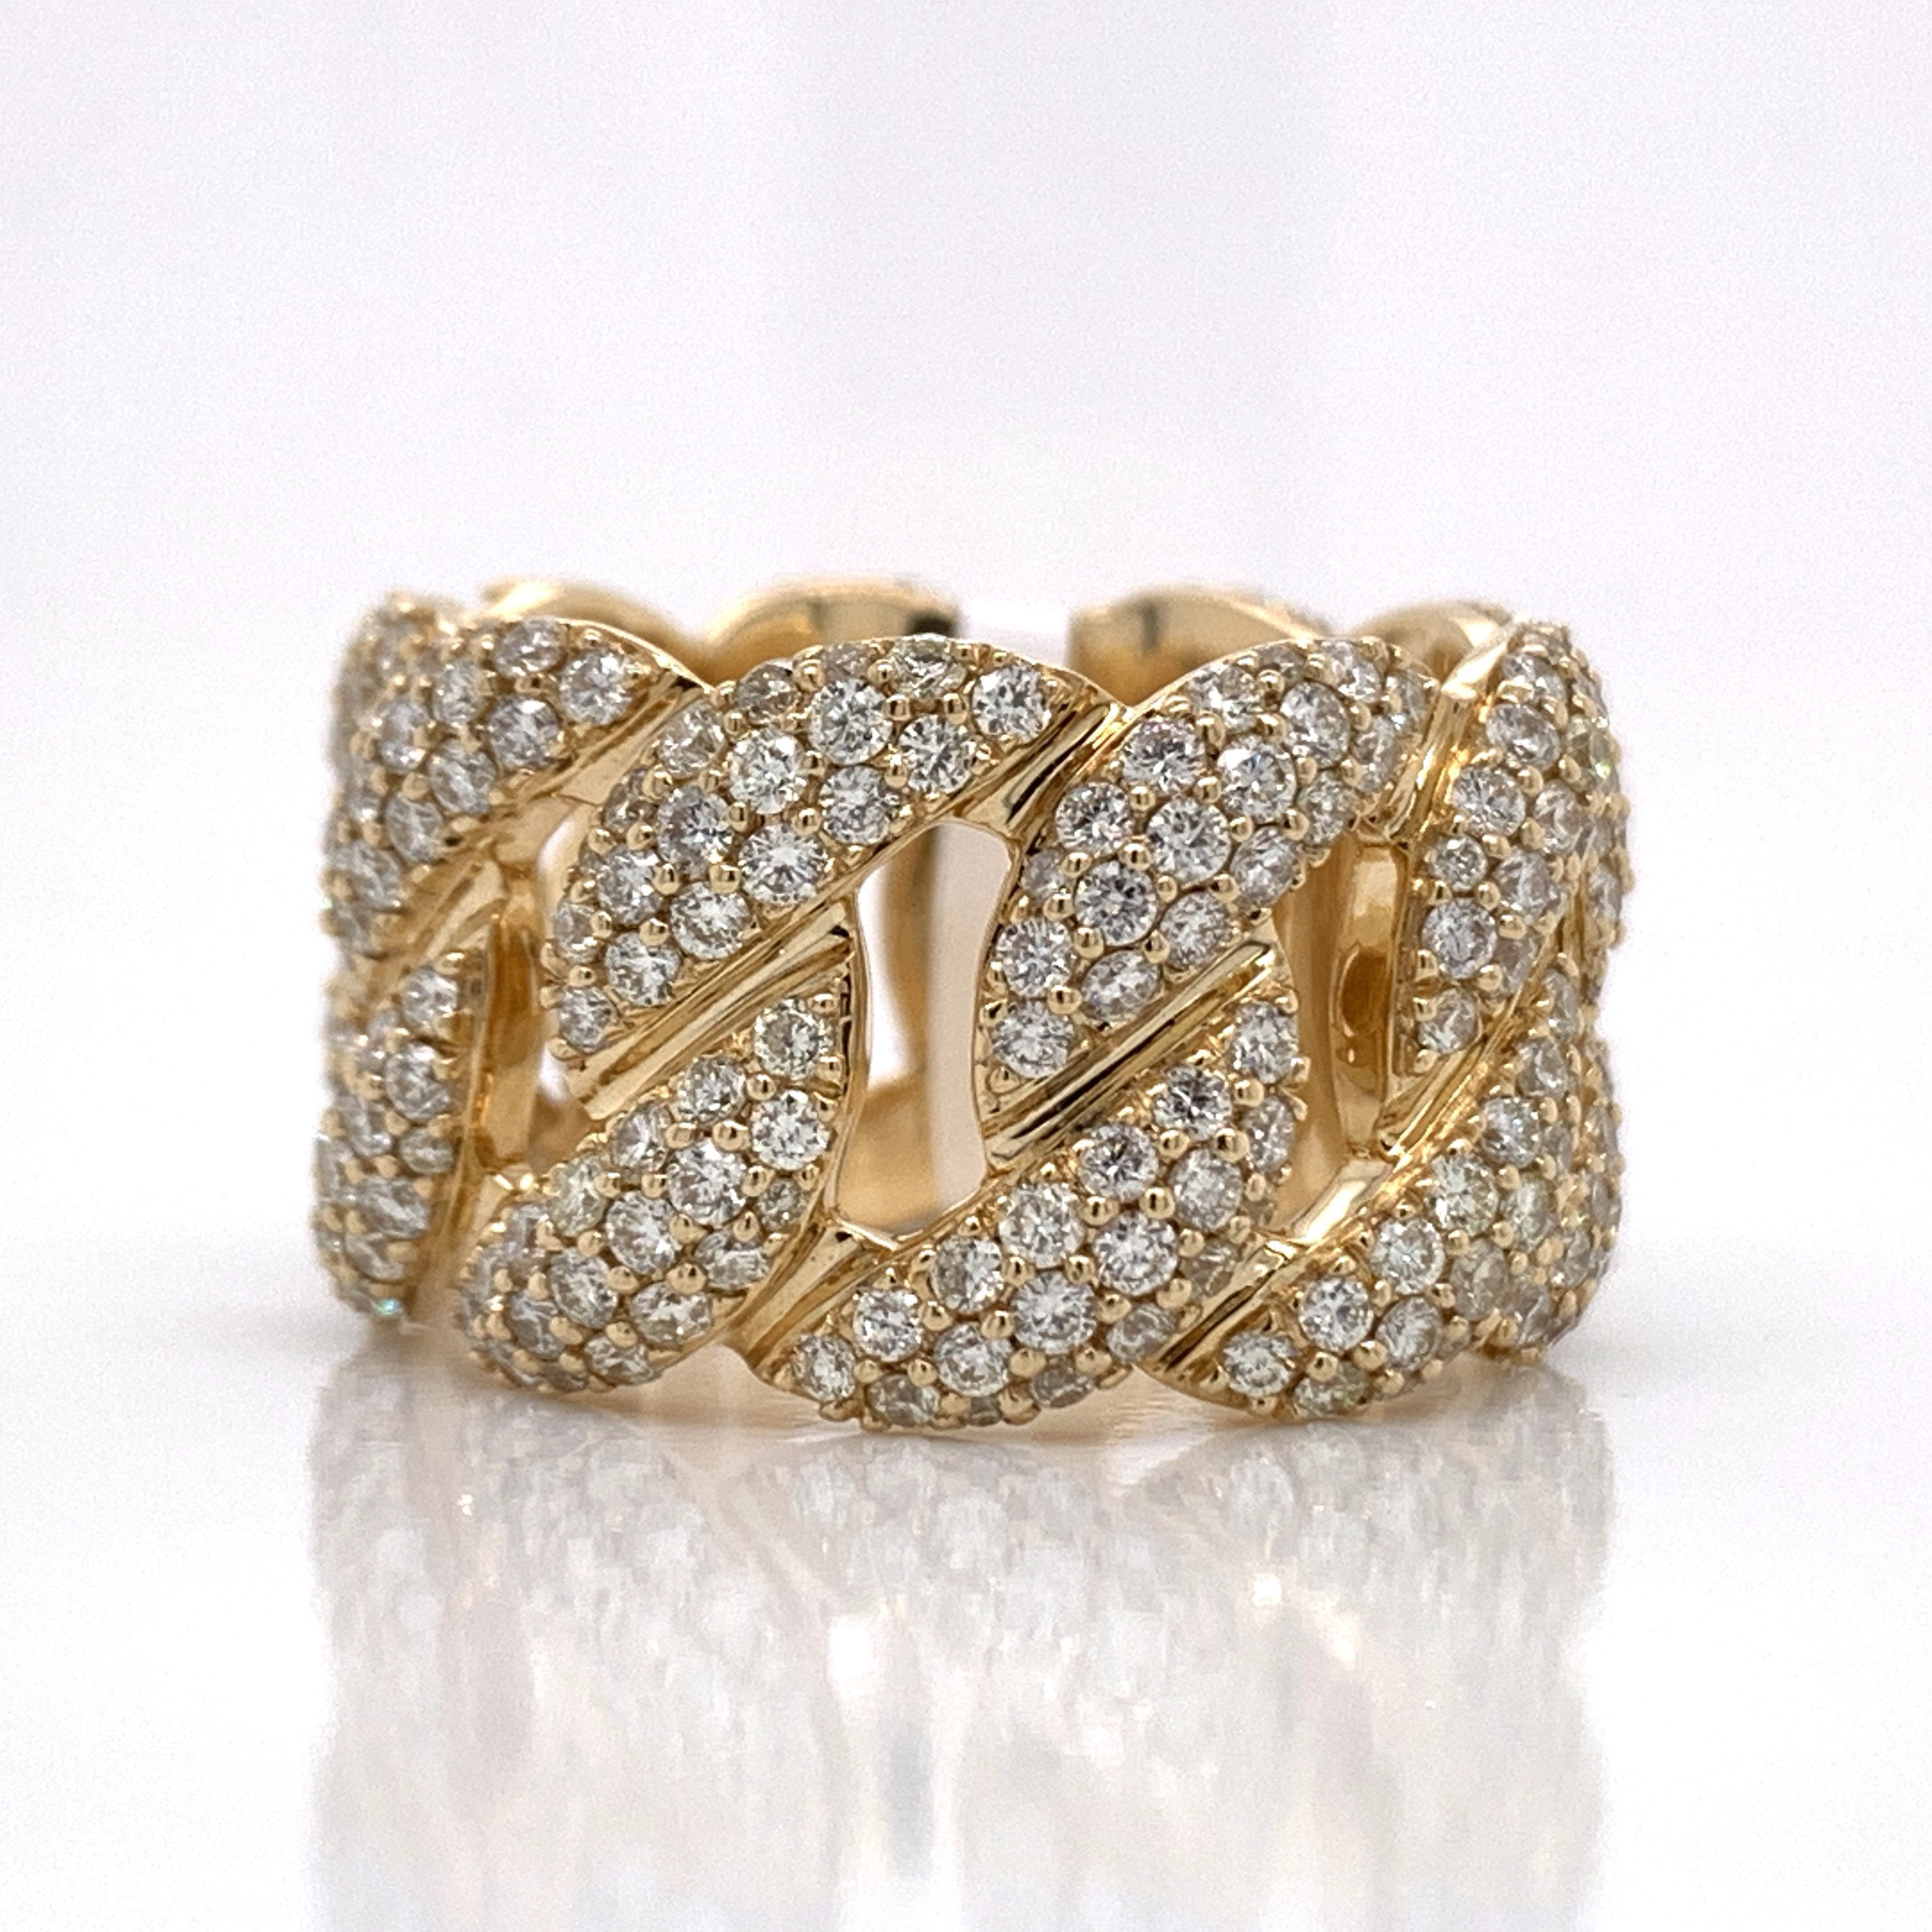 4.00 CT. Diamond 14K Gold Ring - White Carat Diamonds 